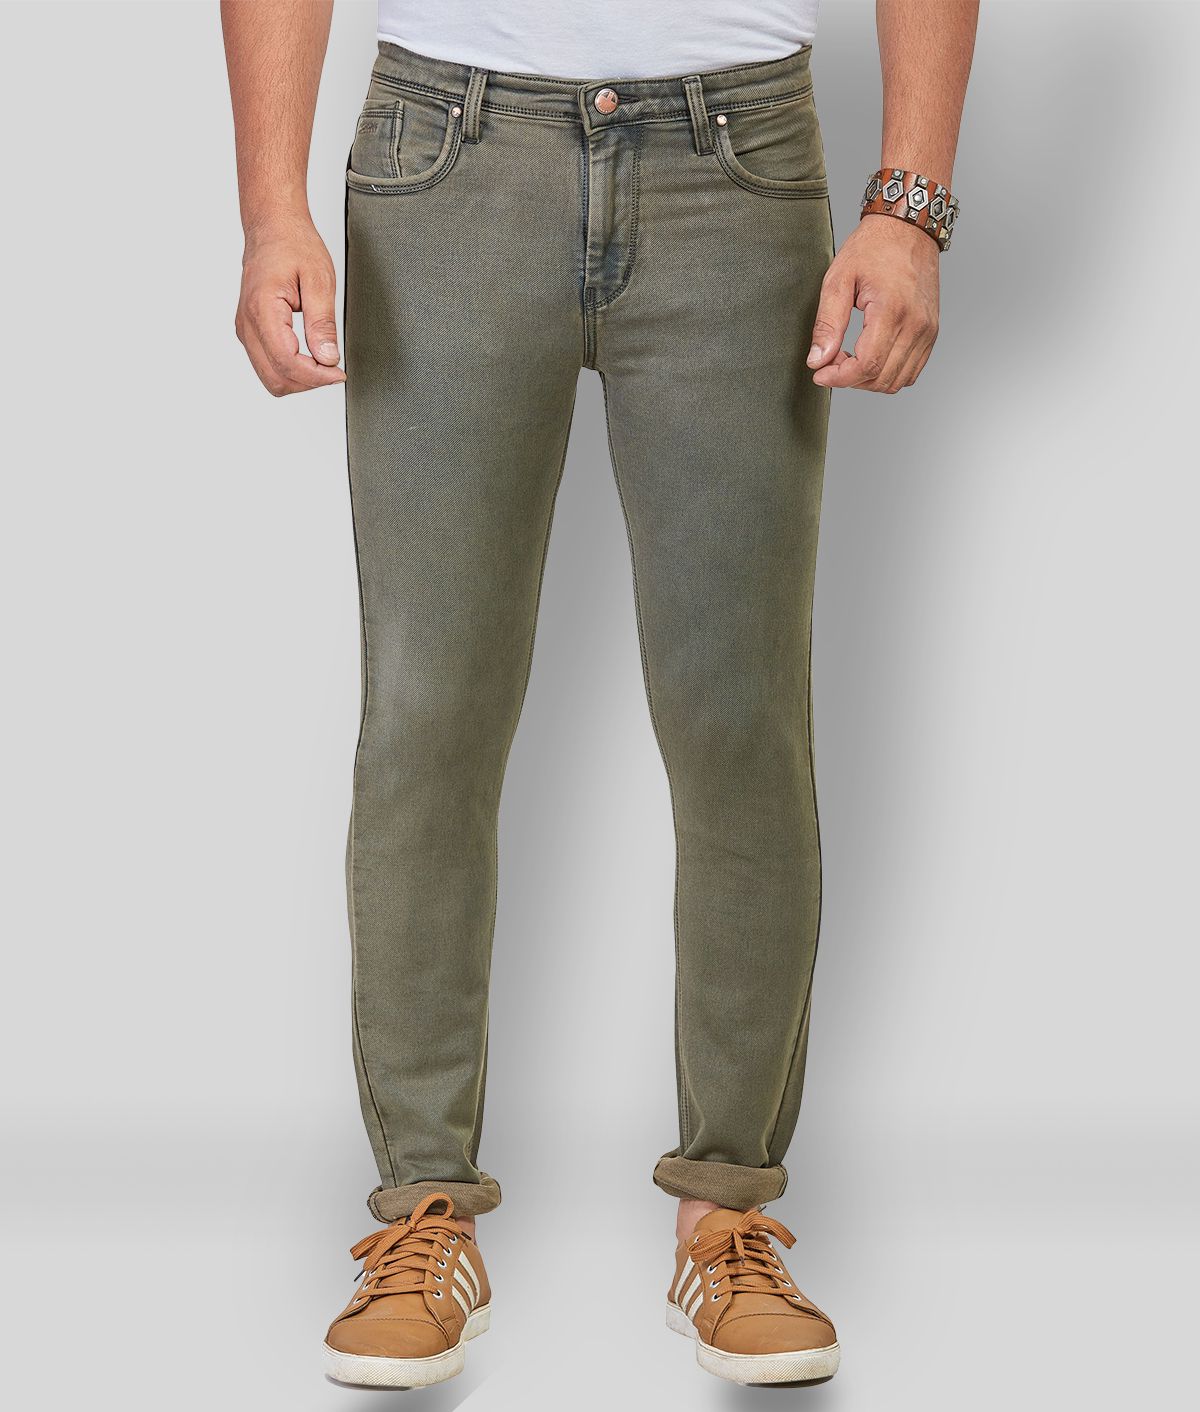 Hasasi Denim - Olive Green Cotton Blend Regular Fit Men's Jeans ( Pack of 1 )